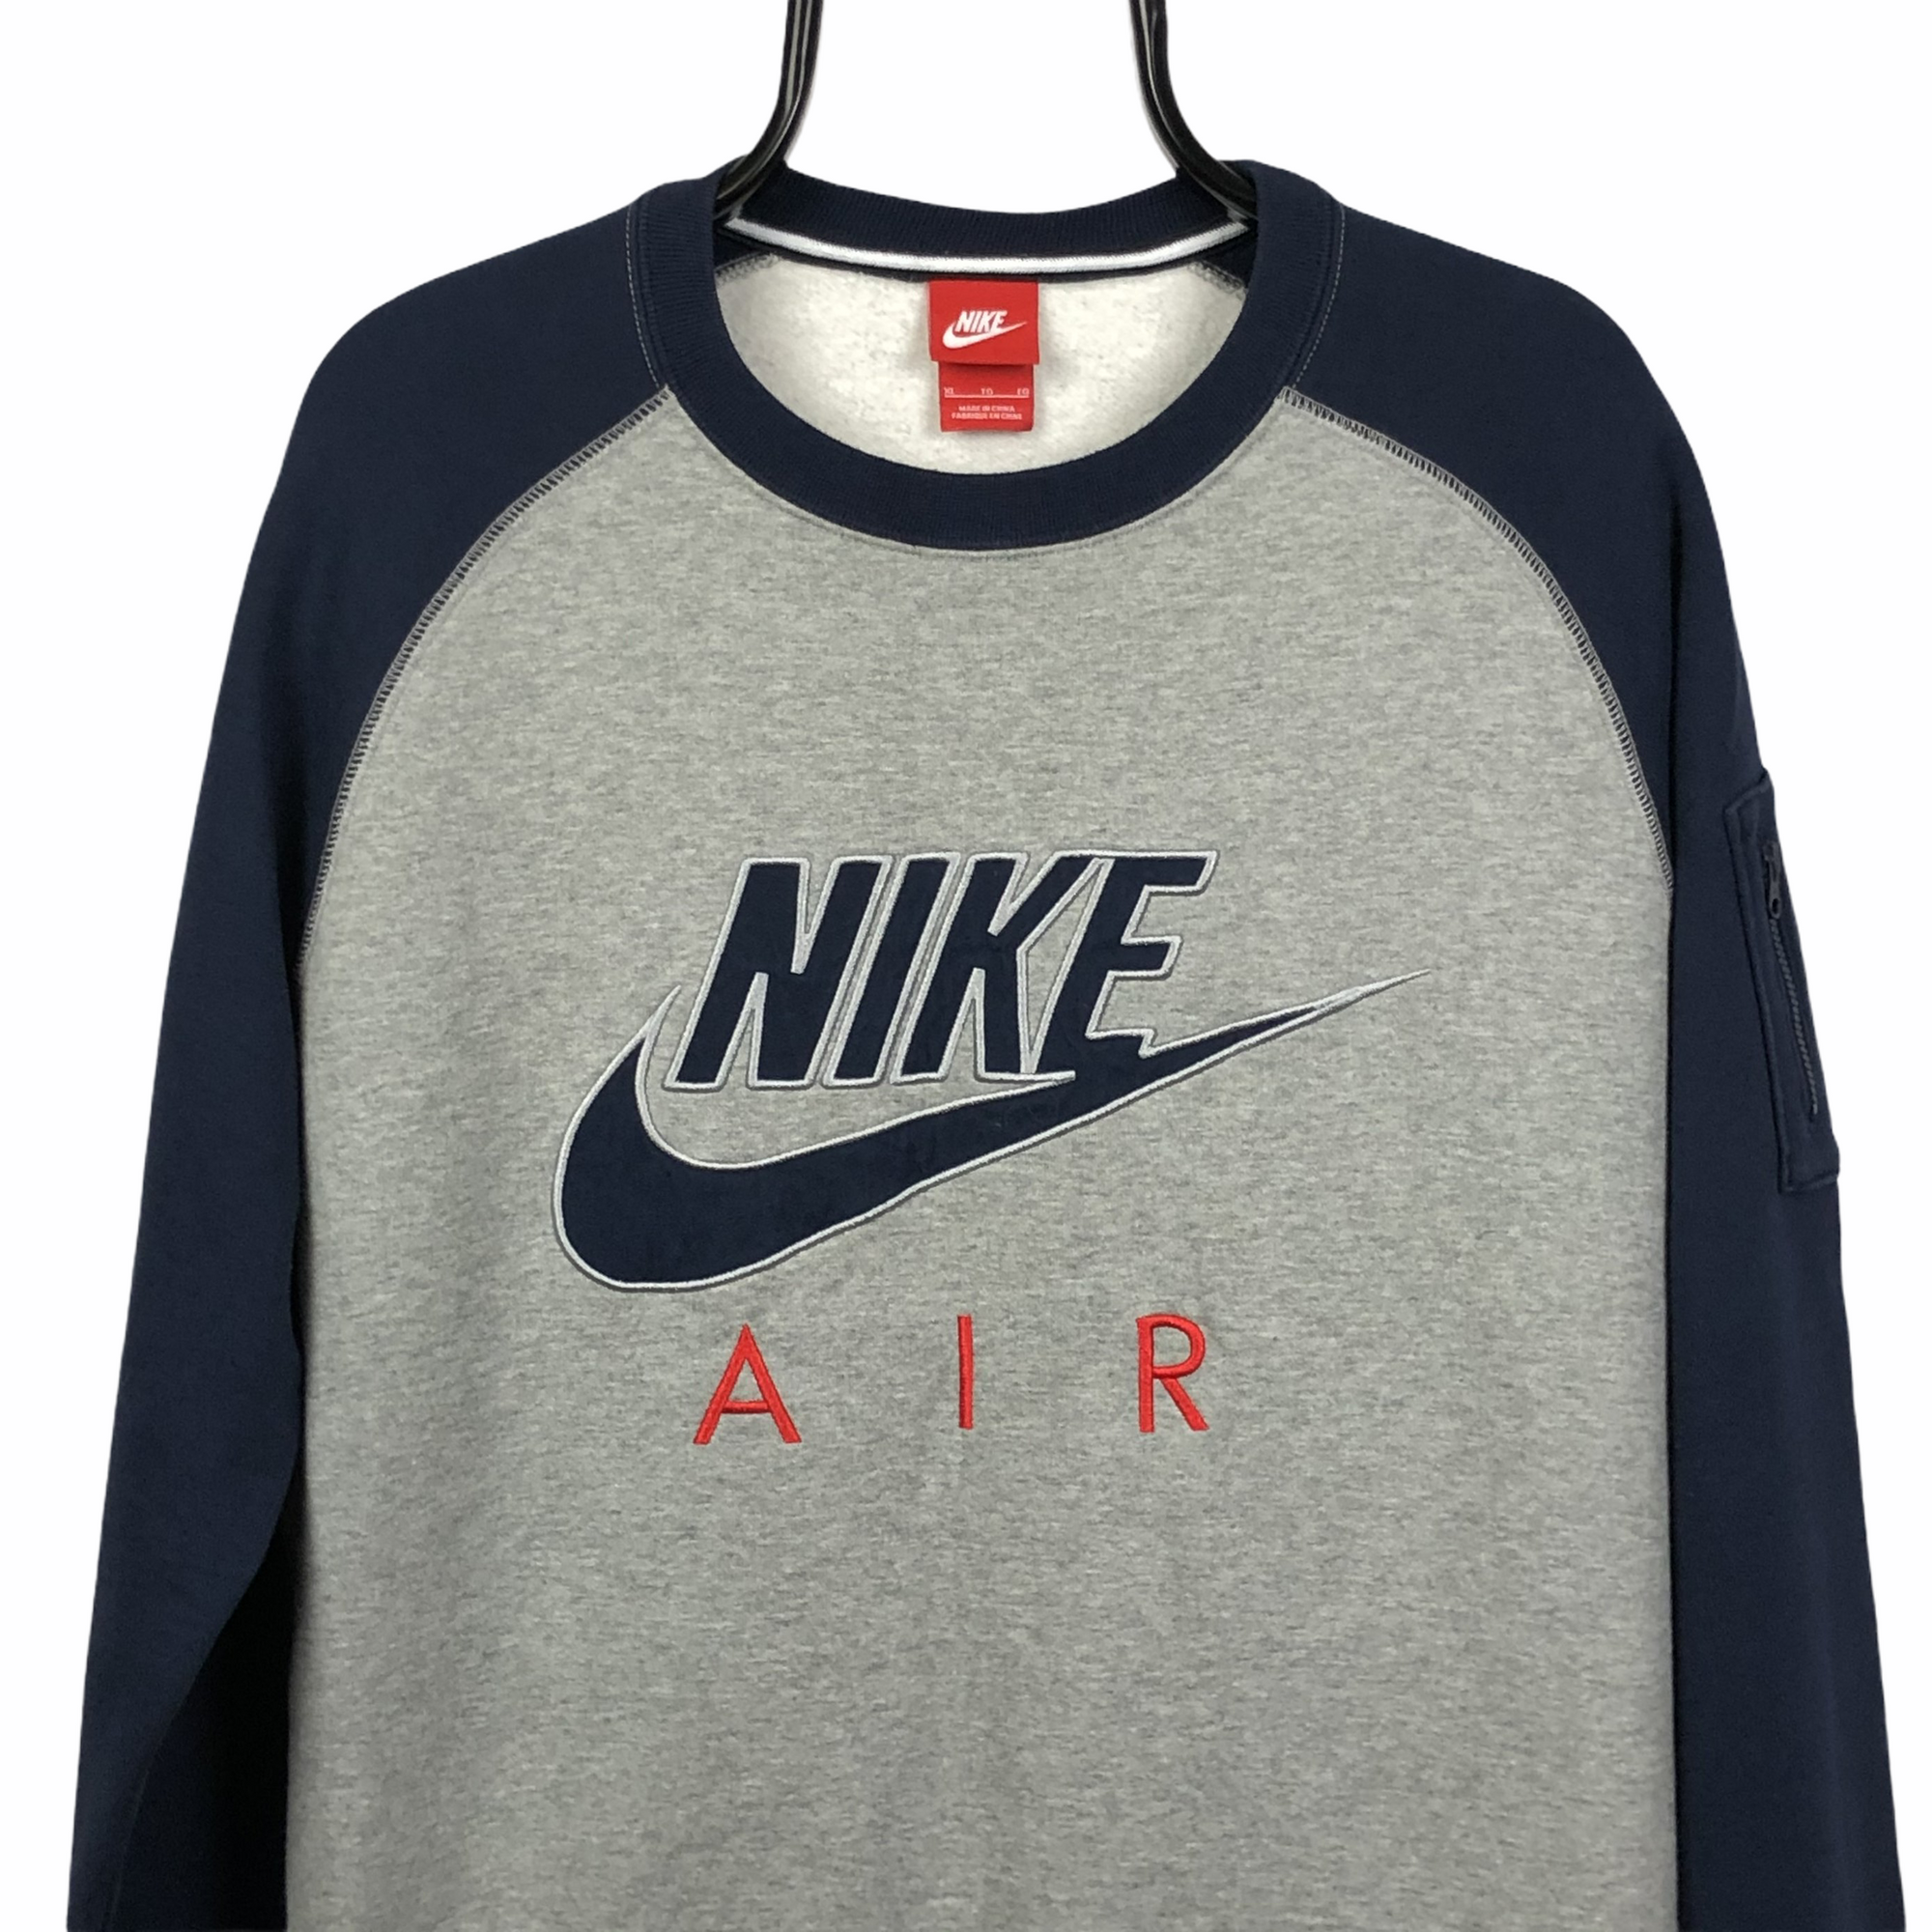 Nike Air Spellout Sweatshirt in Grey & Navy - Men's Large/Women's XL